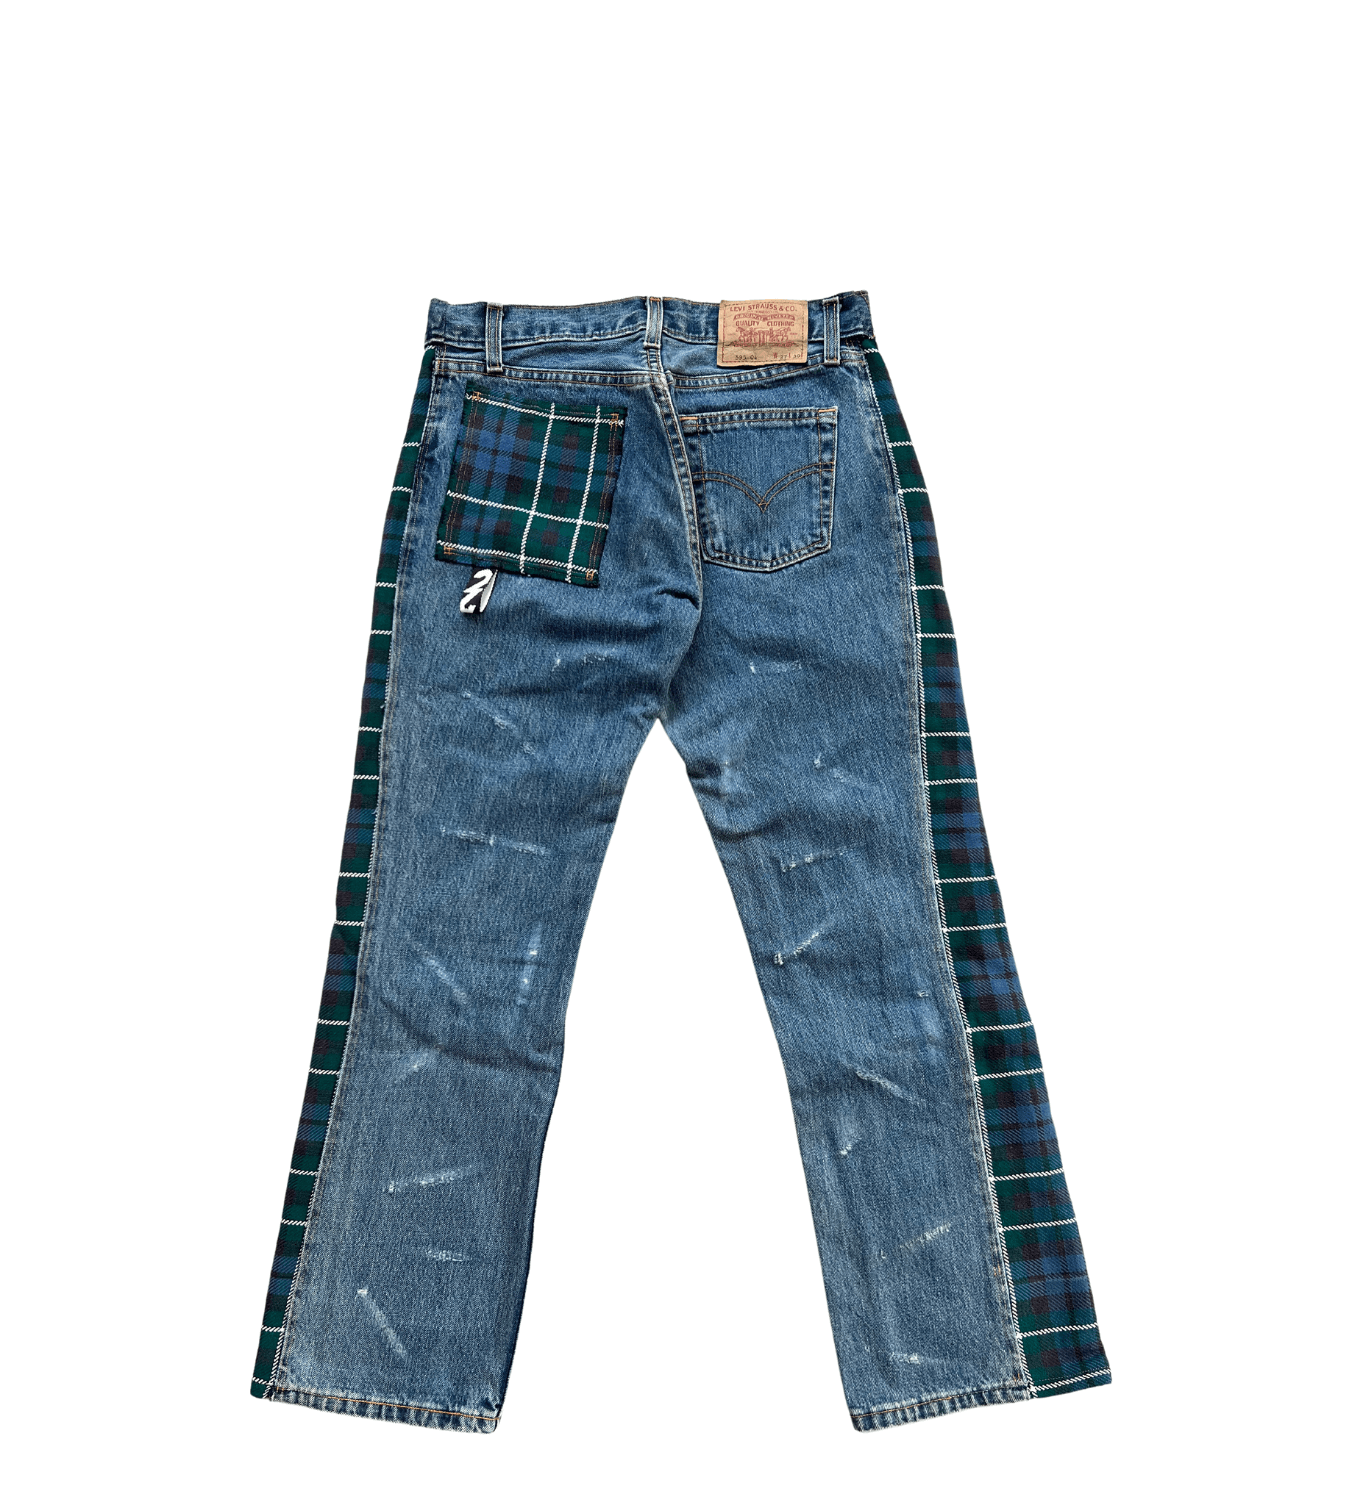 jeans-levis-rework-madeindijon-artisanat-dos